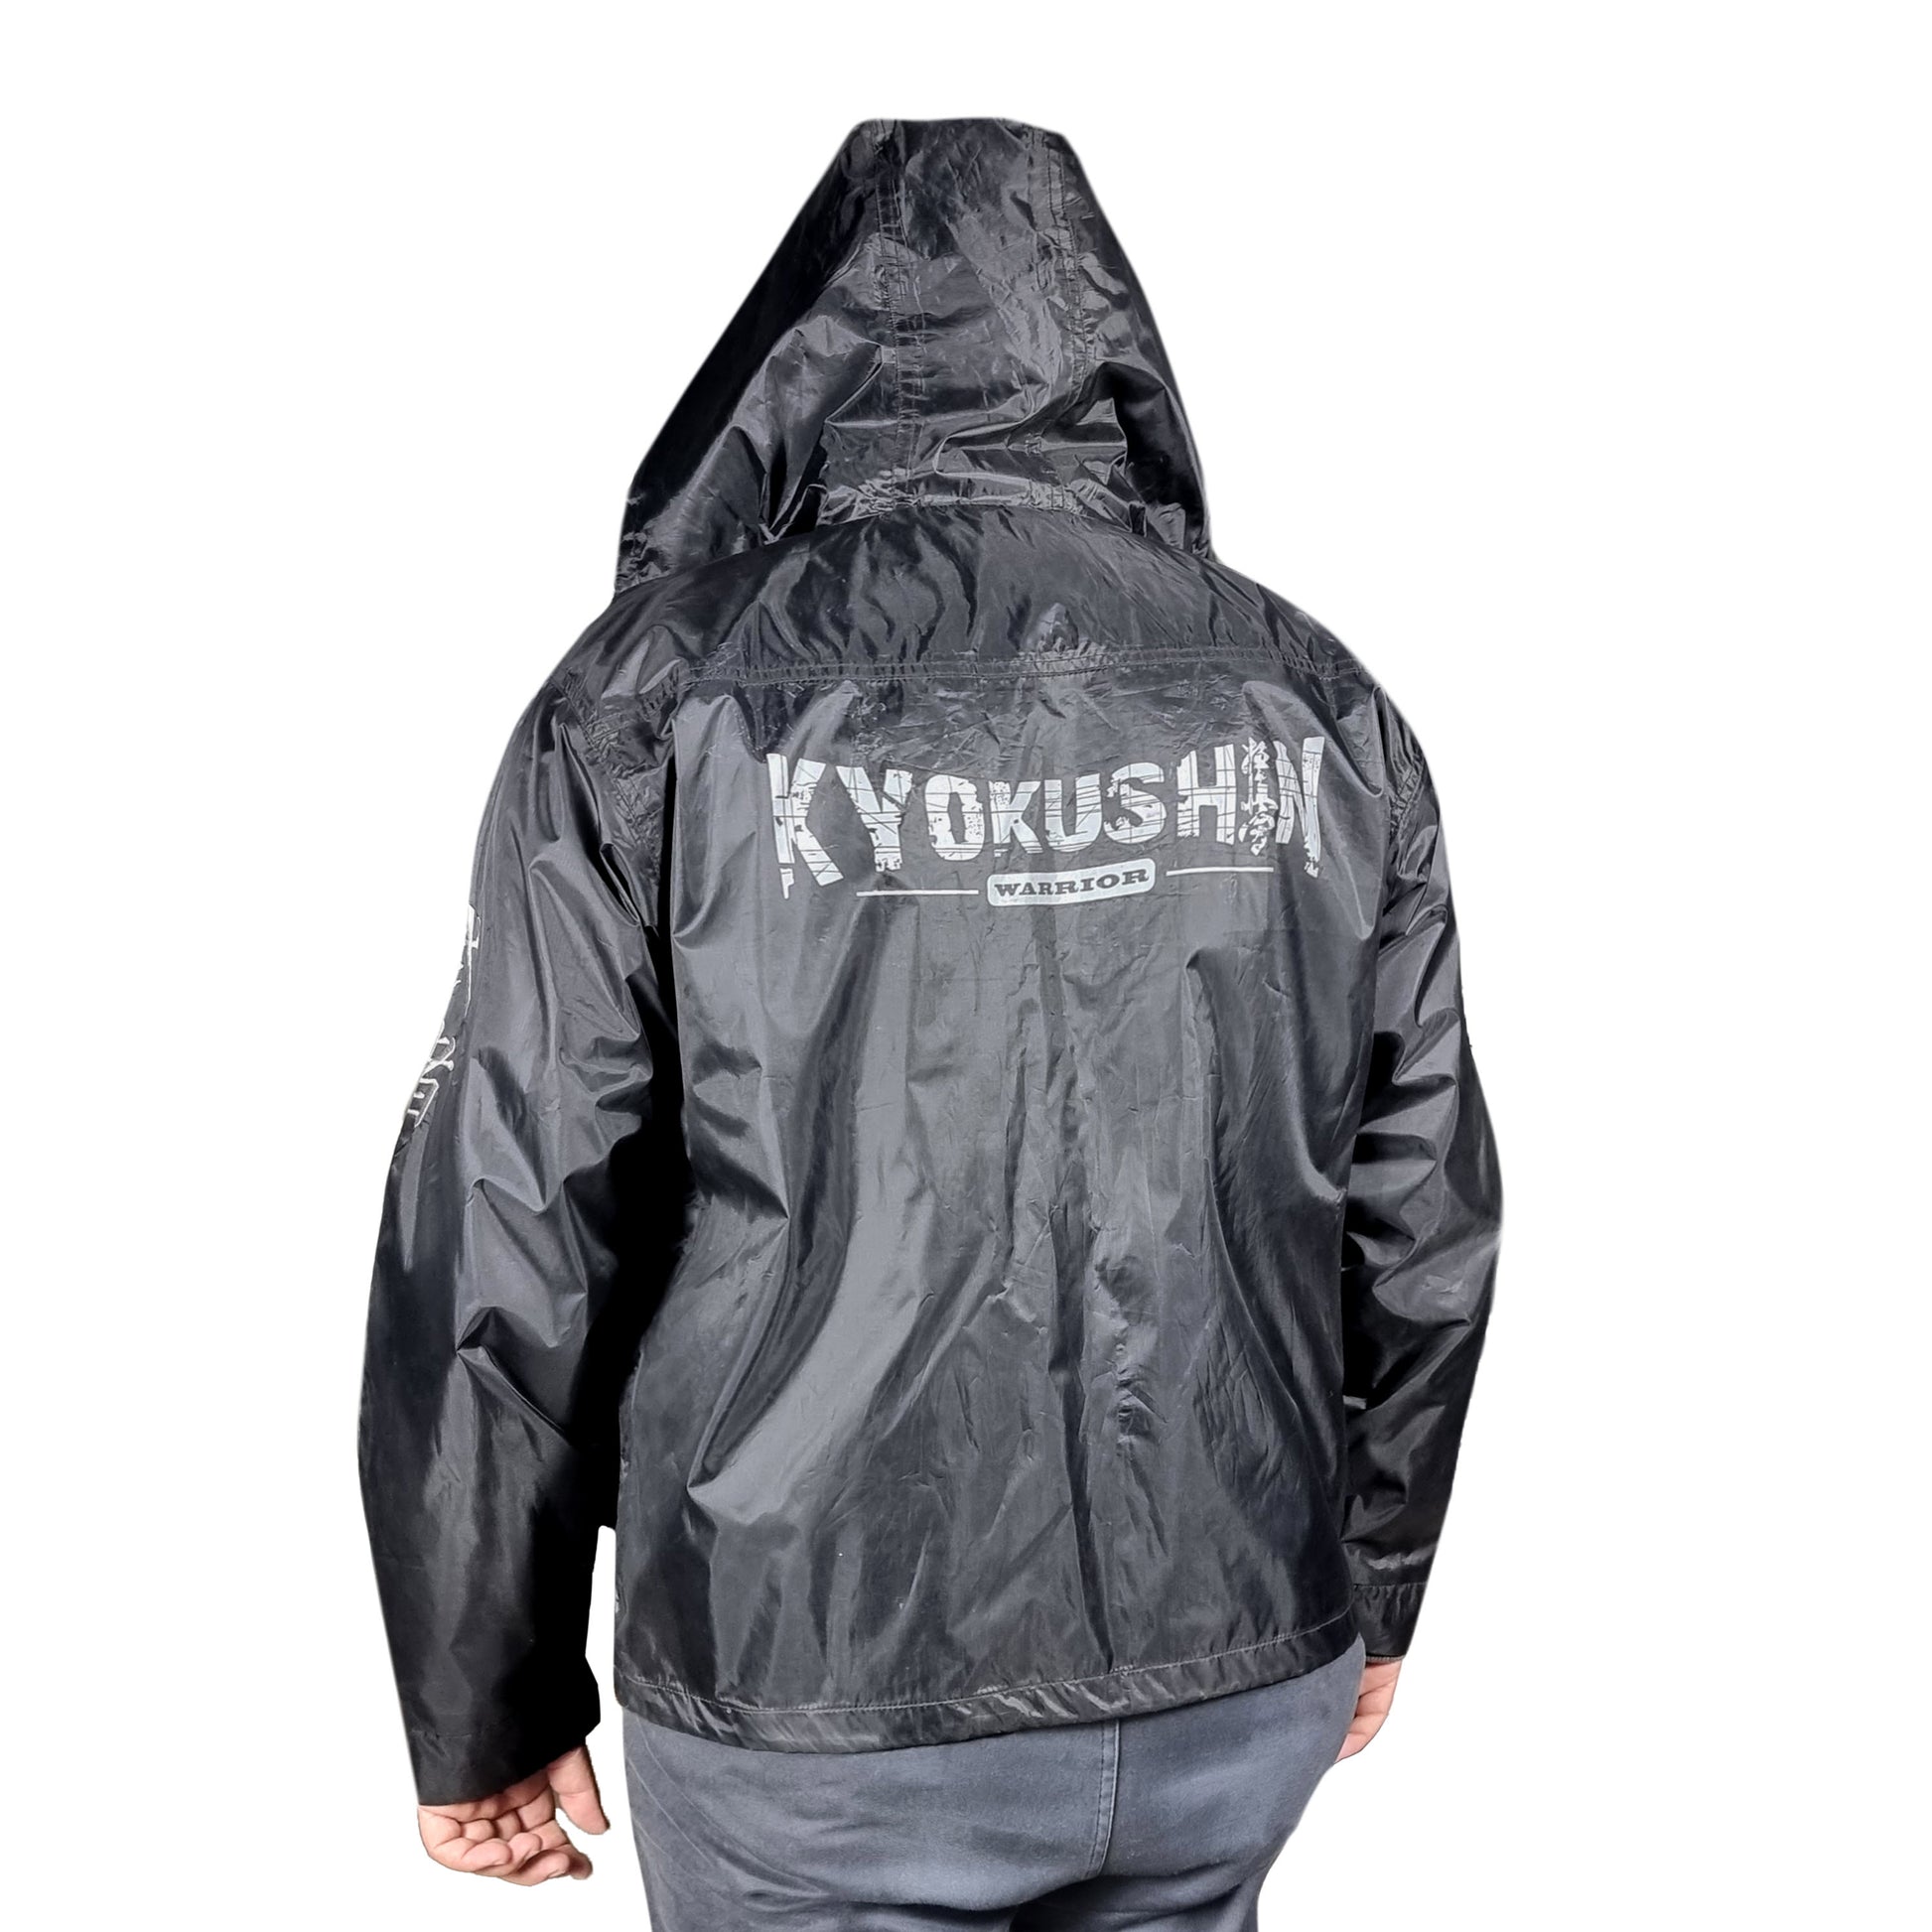 embriodered-men's-hooded-jackets-windbreaker-jacket-for-men